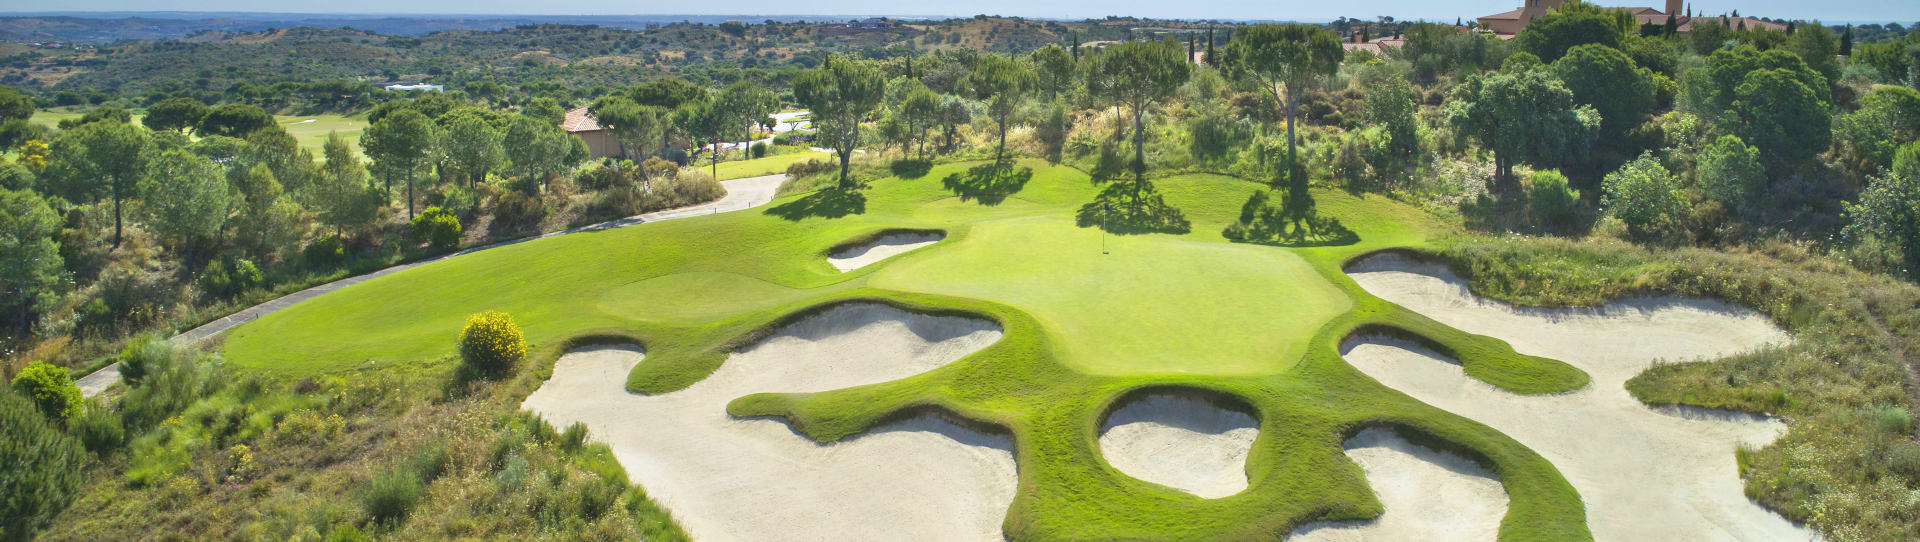 Portugal golf courses - Monte Rei North Golf Course - Photo 3